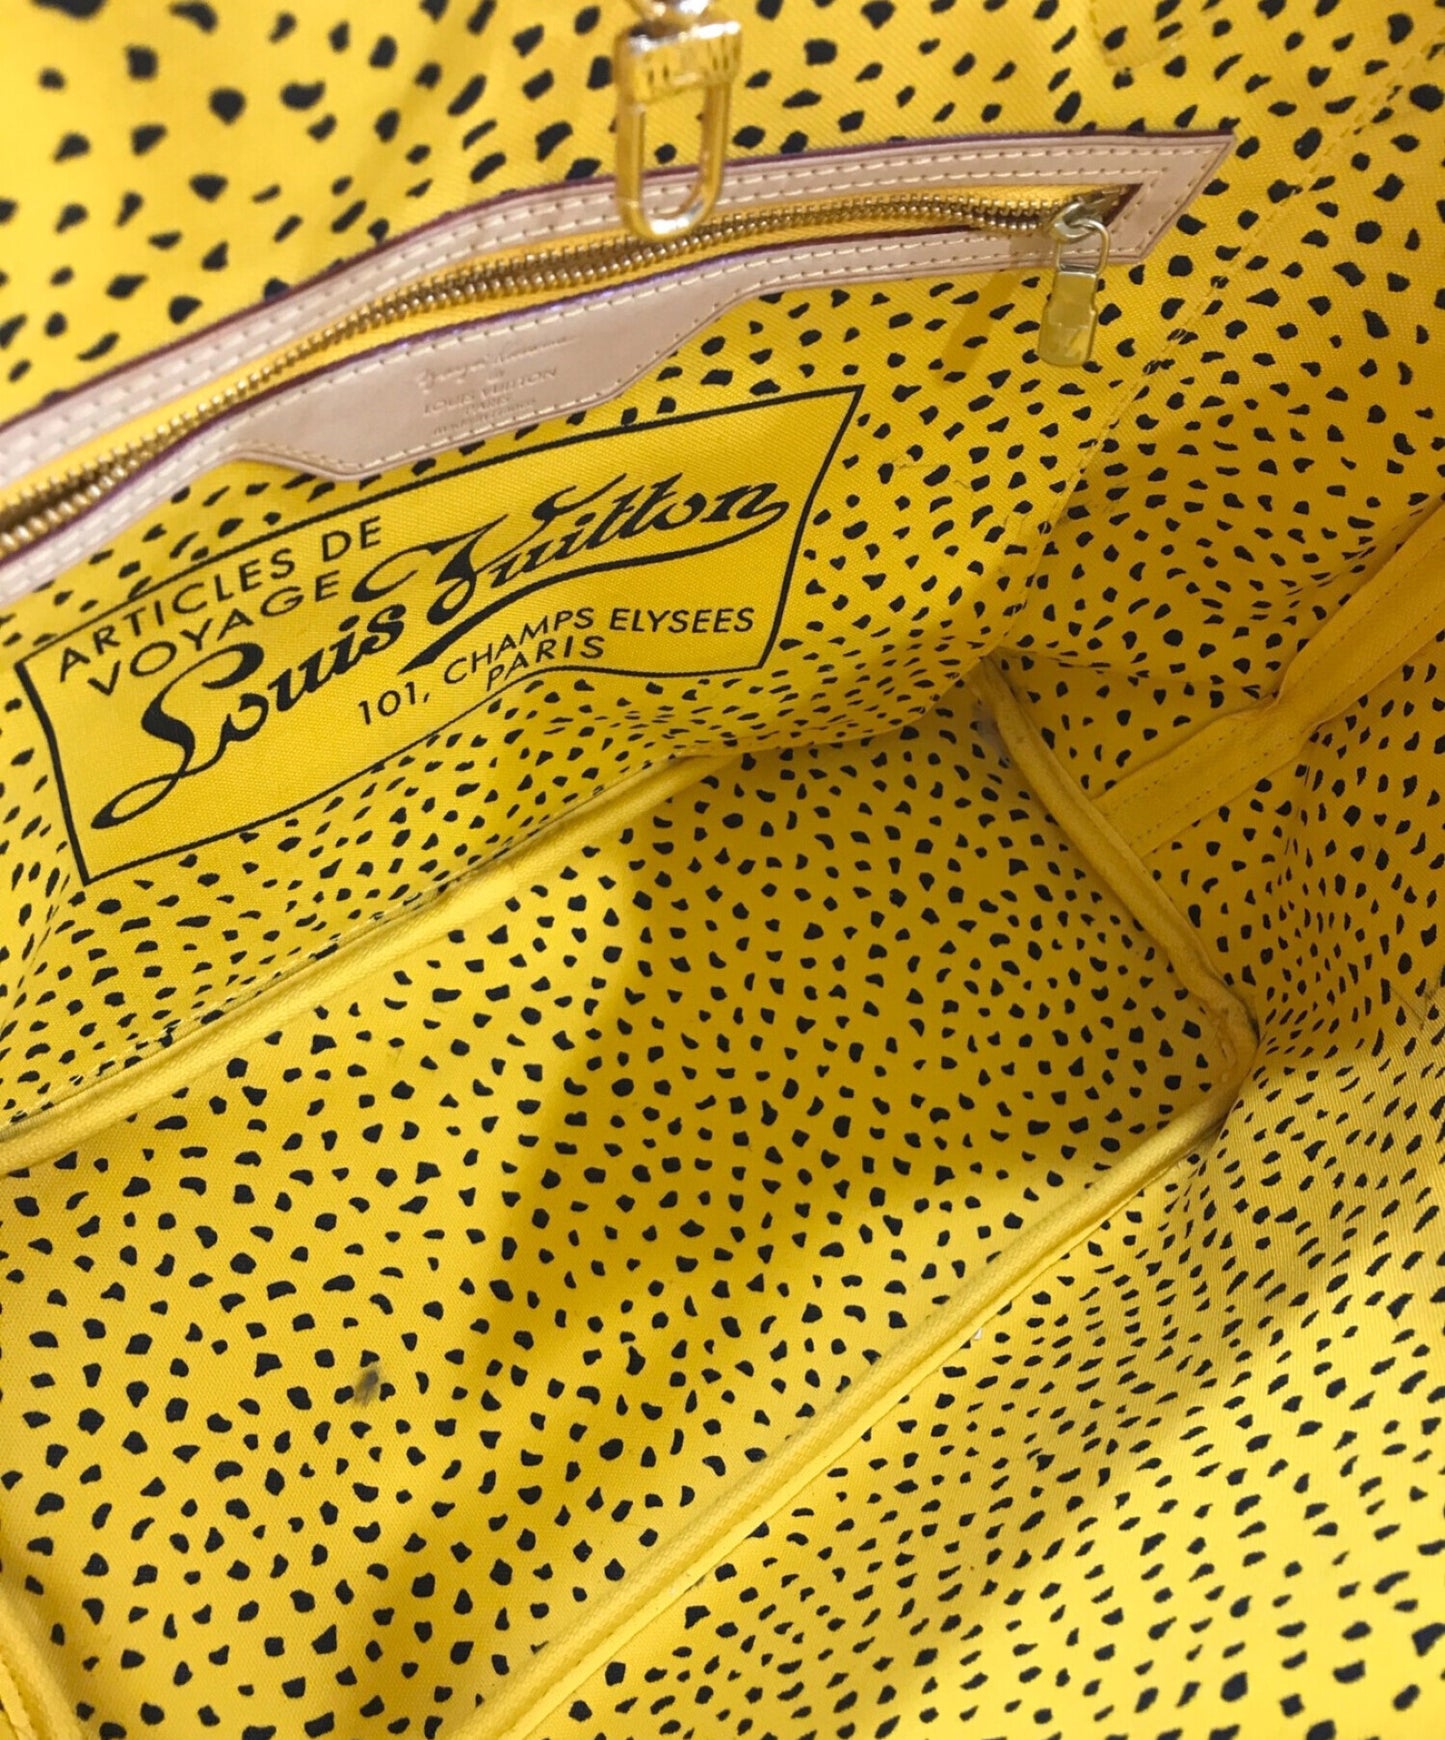 Louis Vuitton Tote Bag M40685